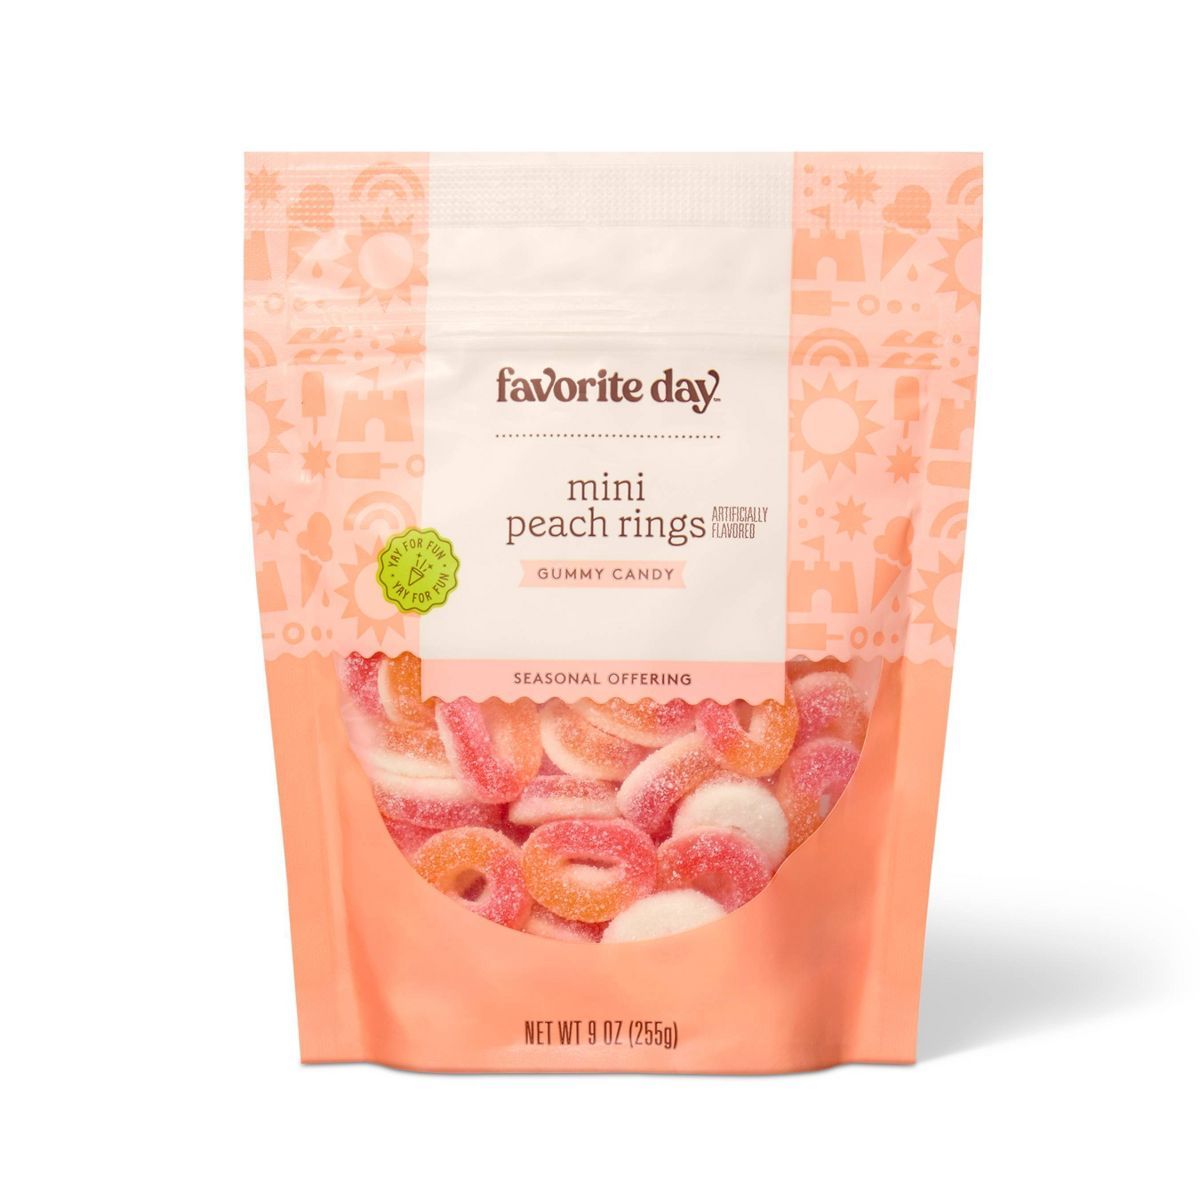 Mini Peach Rings Gummy Candy Bag - 9oz - Favorite Day™ | Target